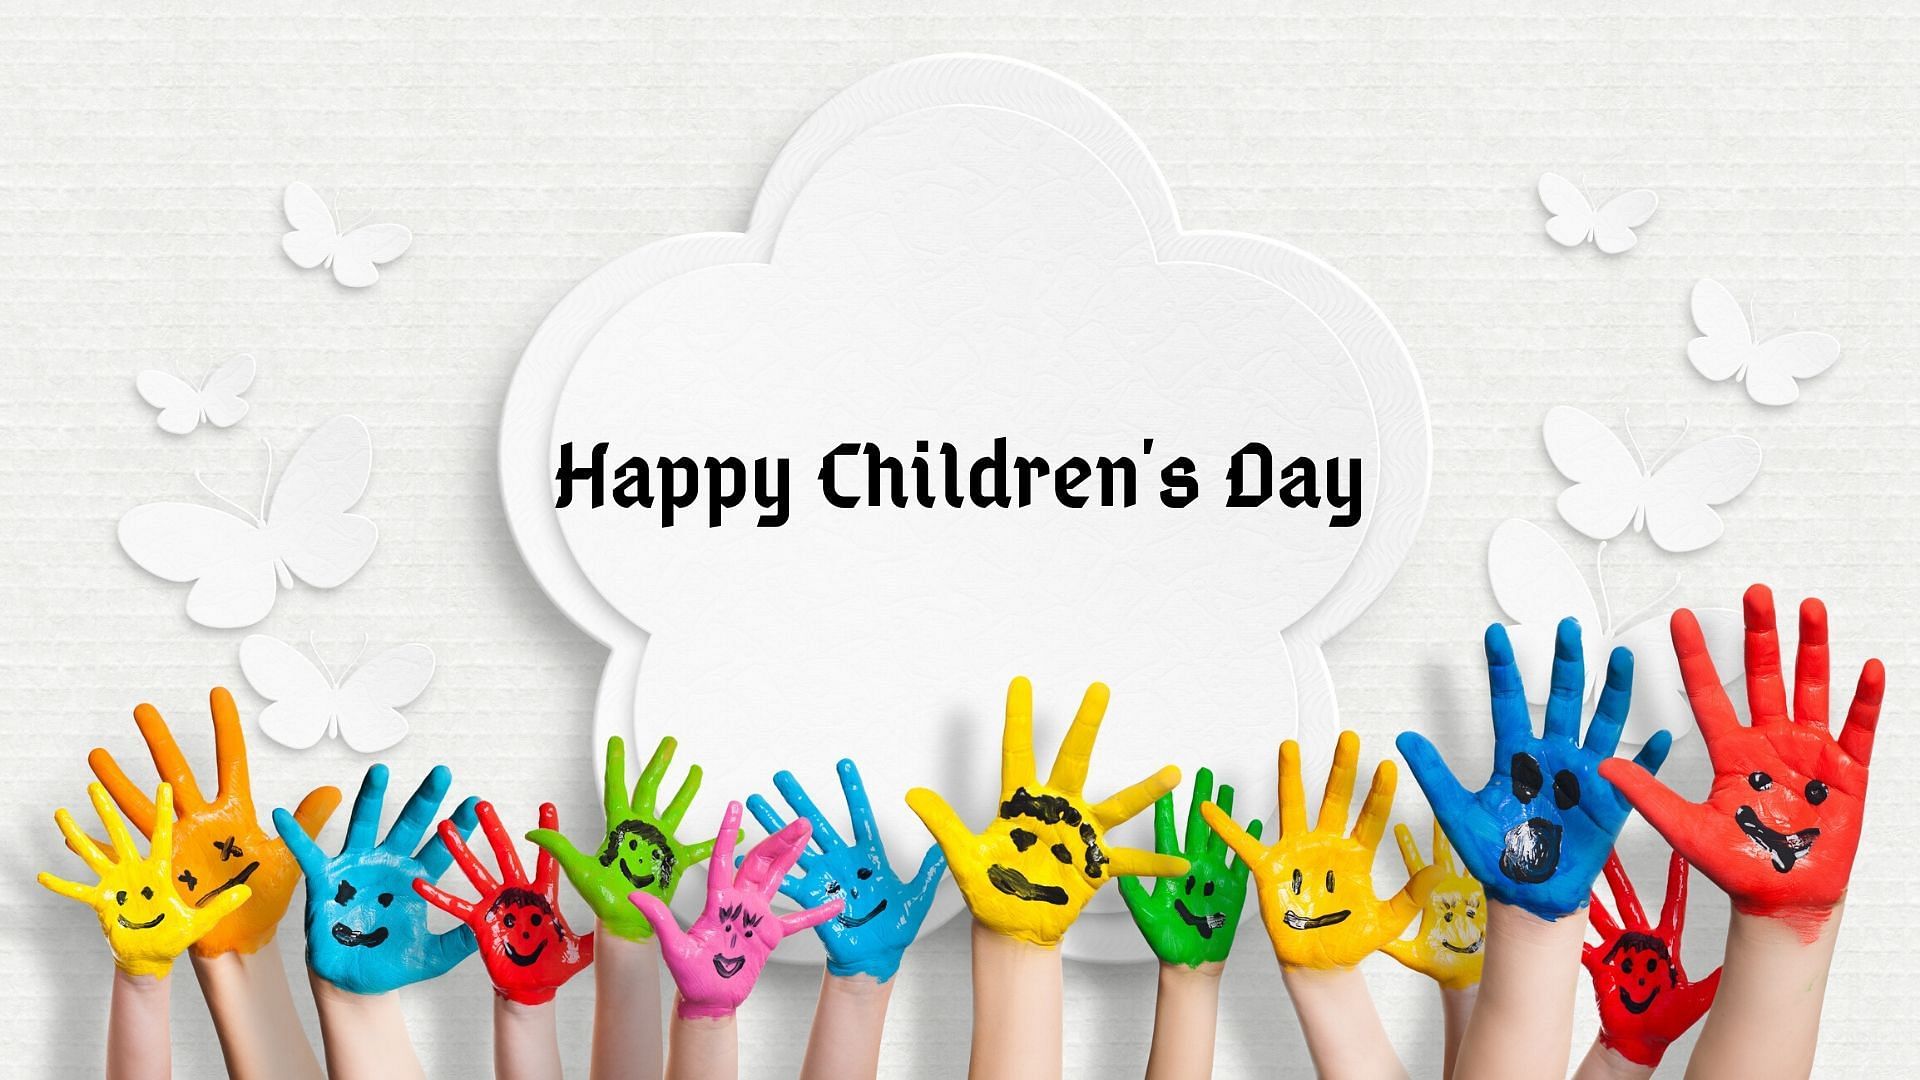 Happy Children’s Day speech ideas, long and short essays.